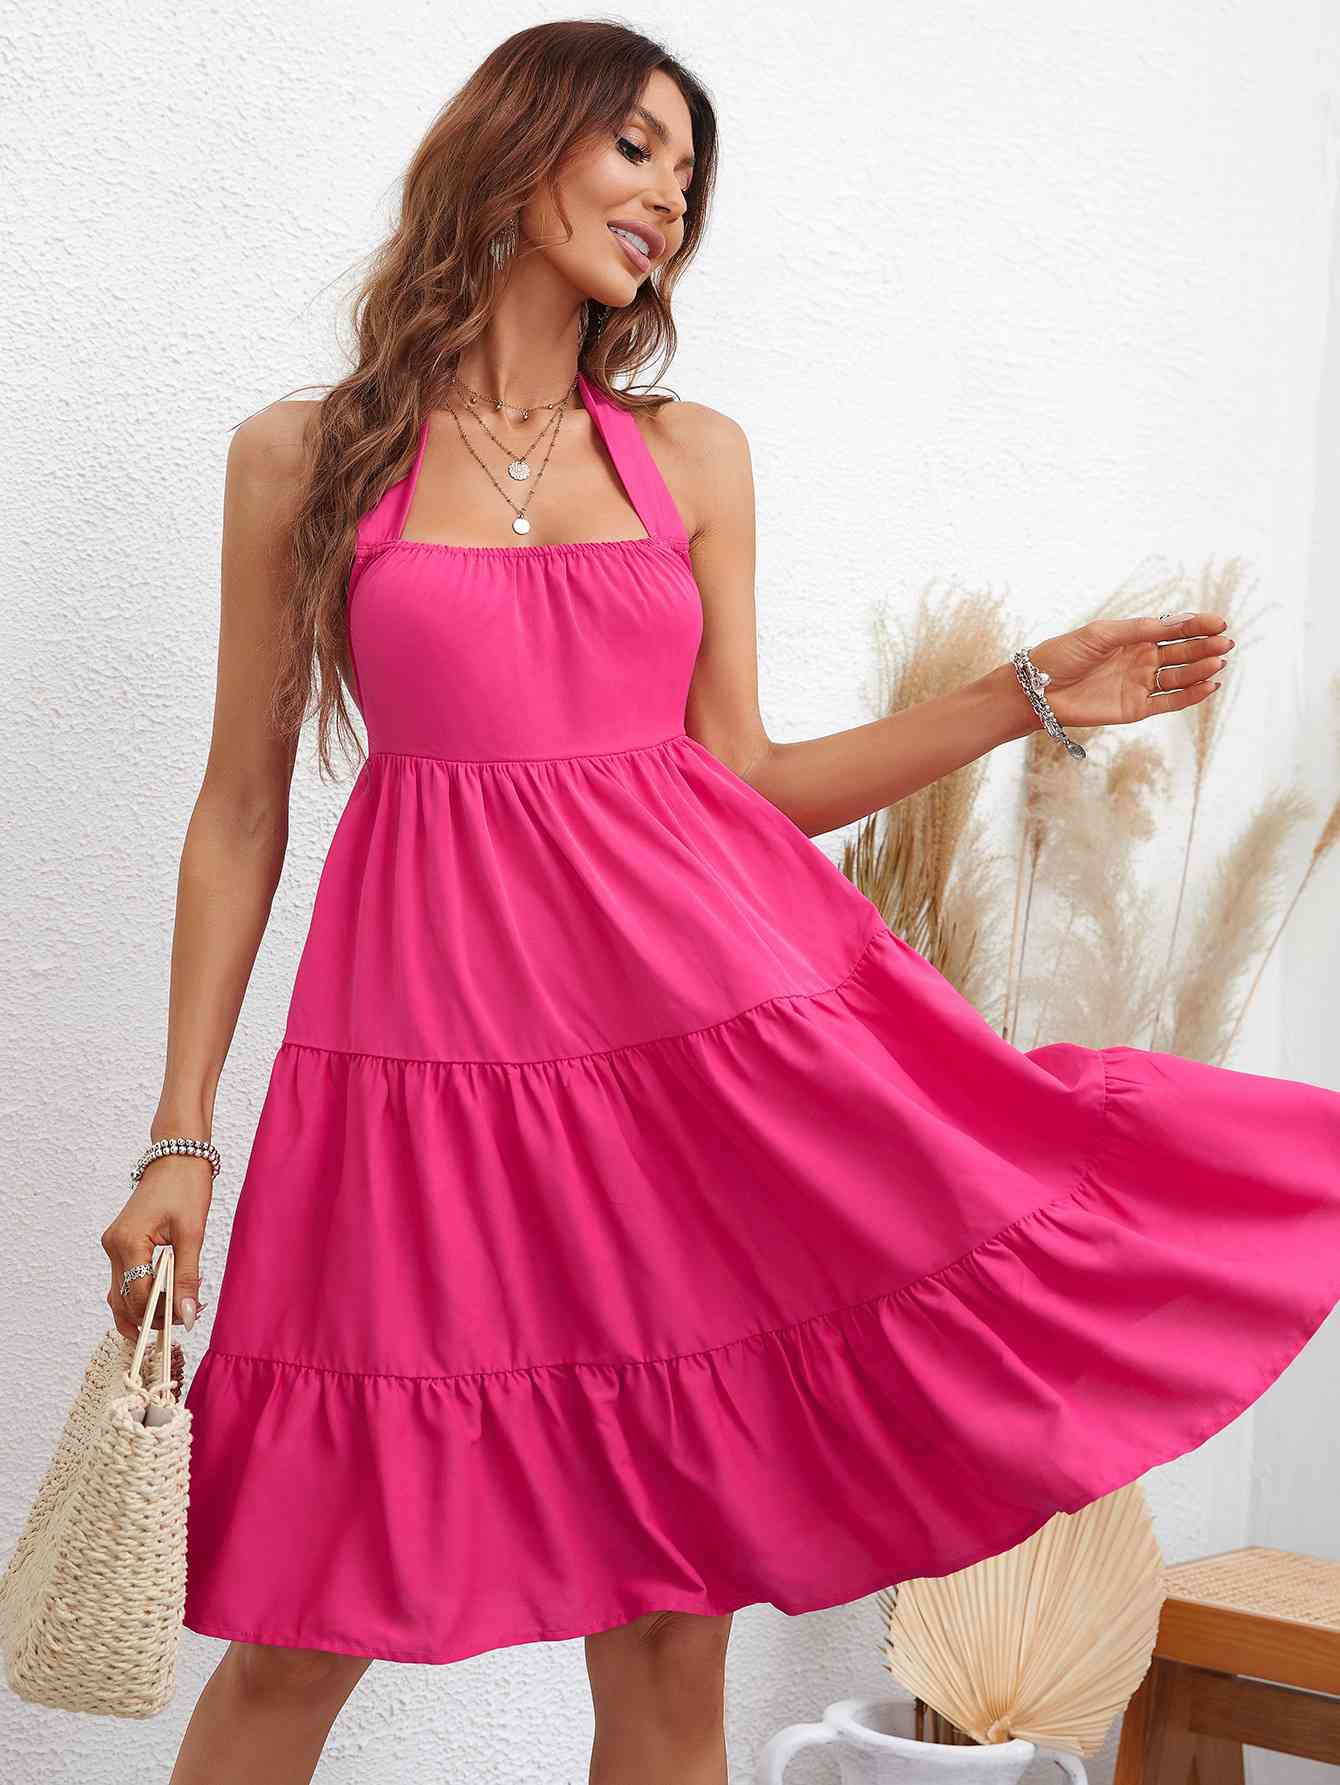 TEEK - Hot Pink Halter Neck Tiered Dress DRESS TEEK Trend   